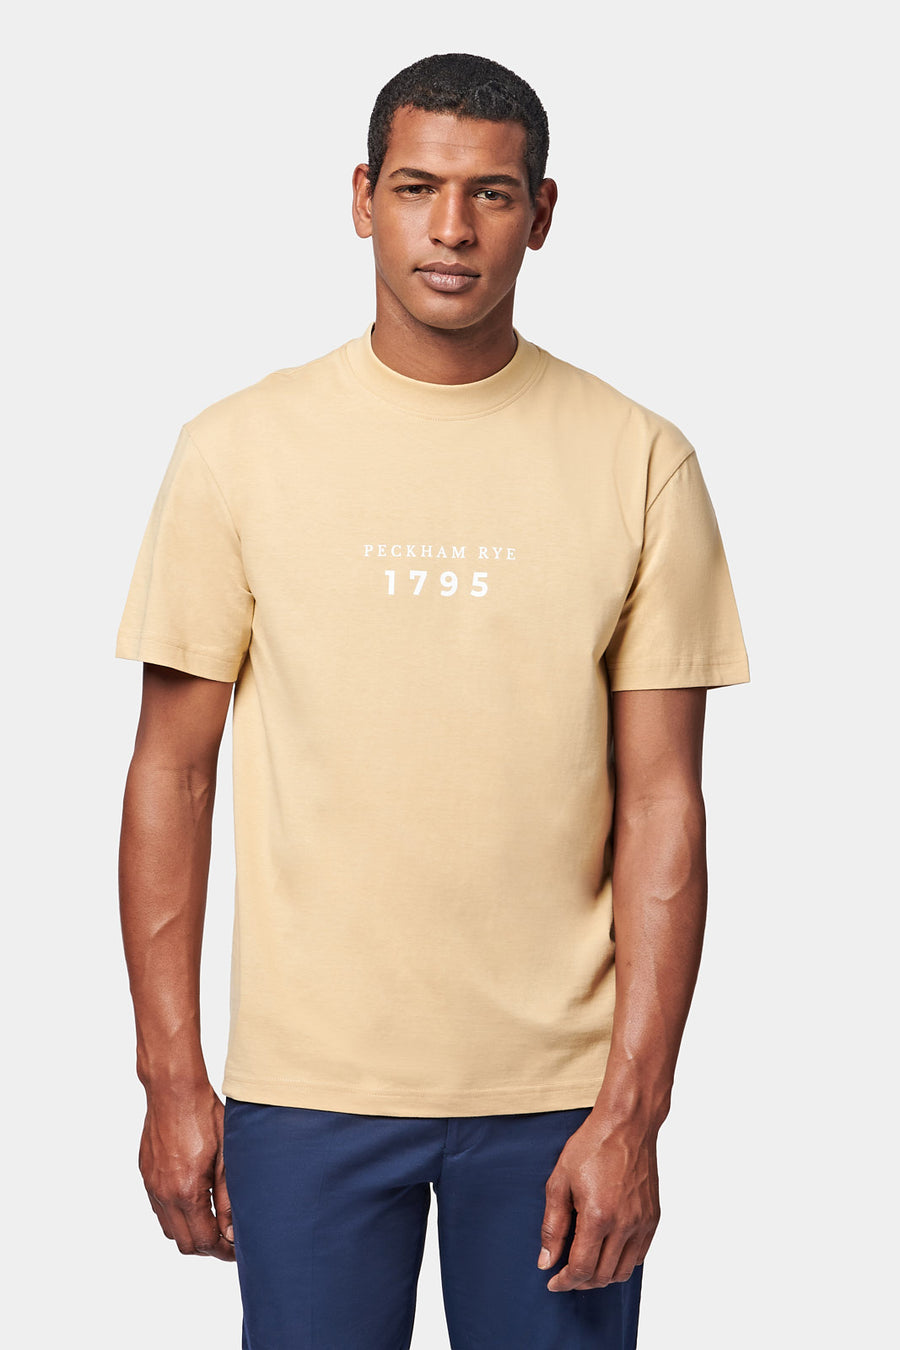 Print T-Shirt in Warm Sand